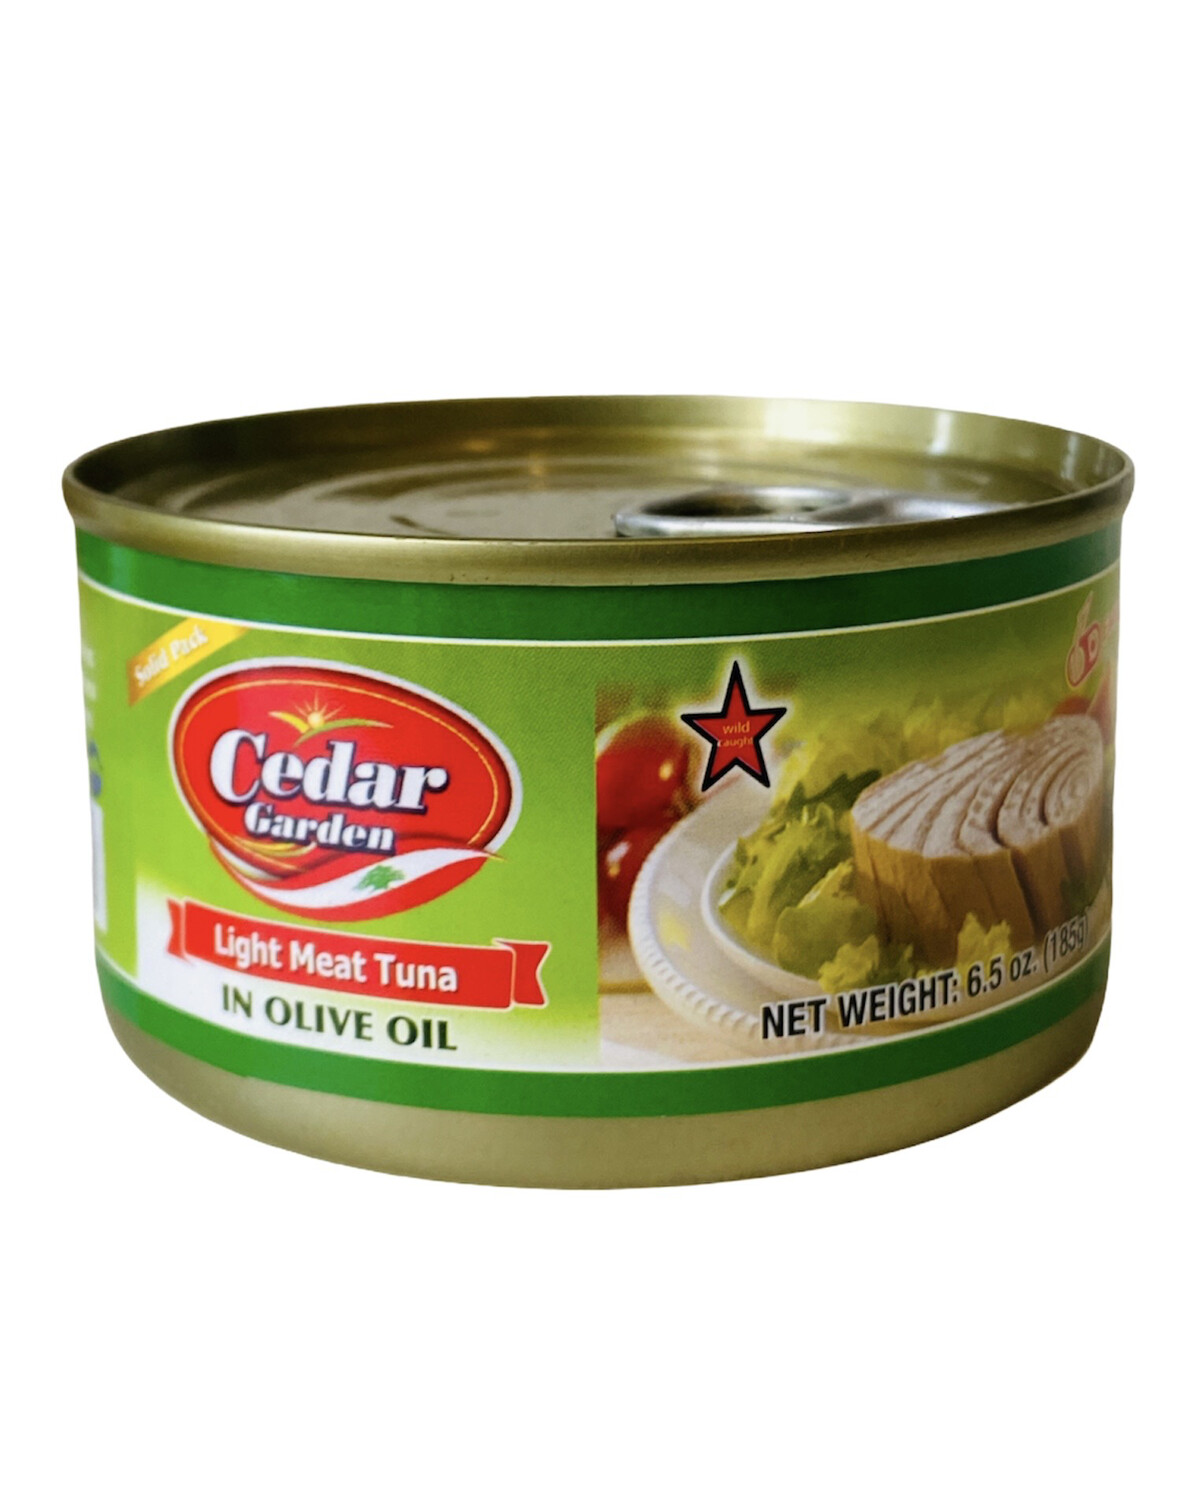 Cedar Garden Tuna With Olive Oil 48x6.5oz